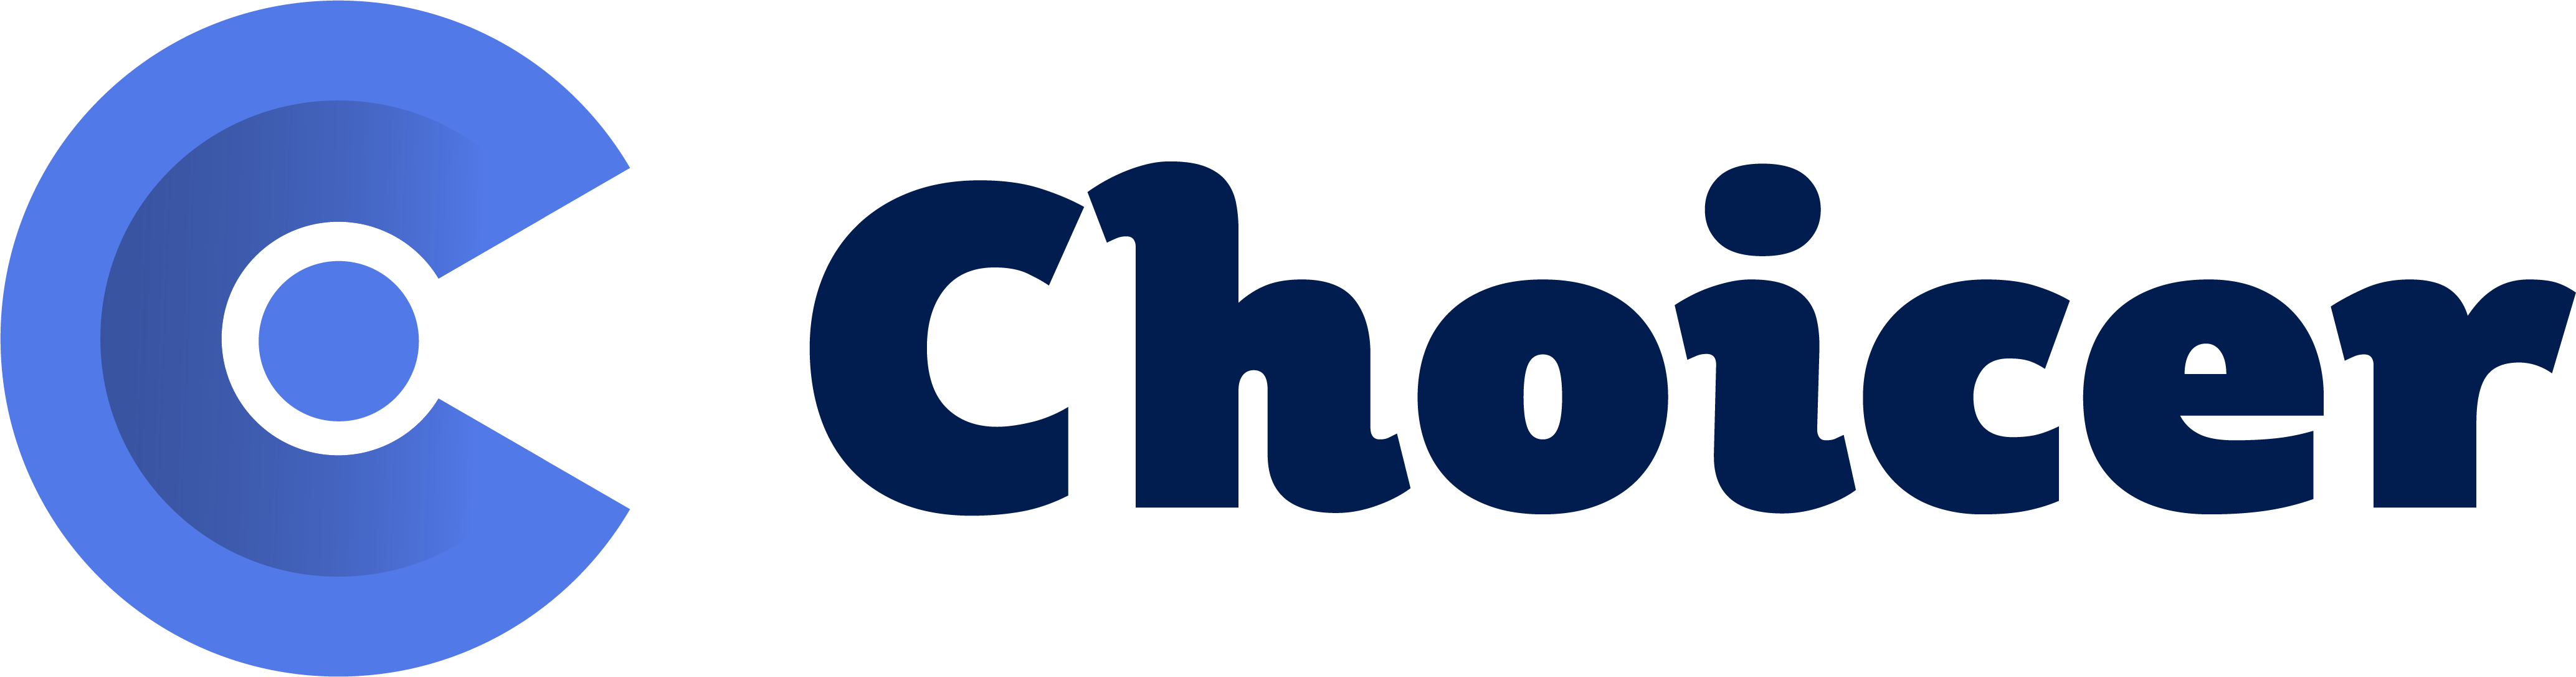 Choicer의 회사 CI